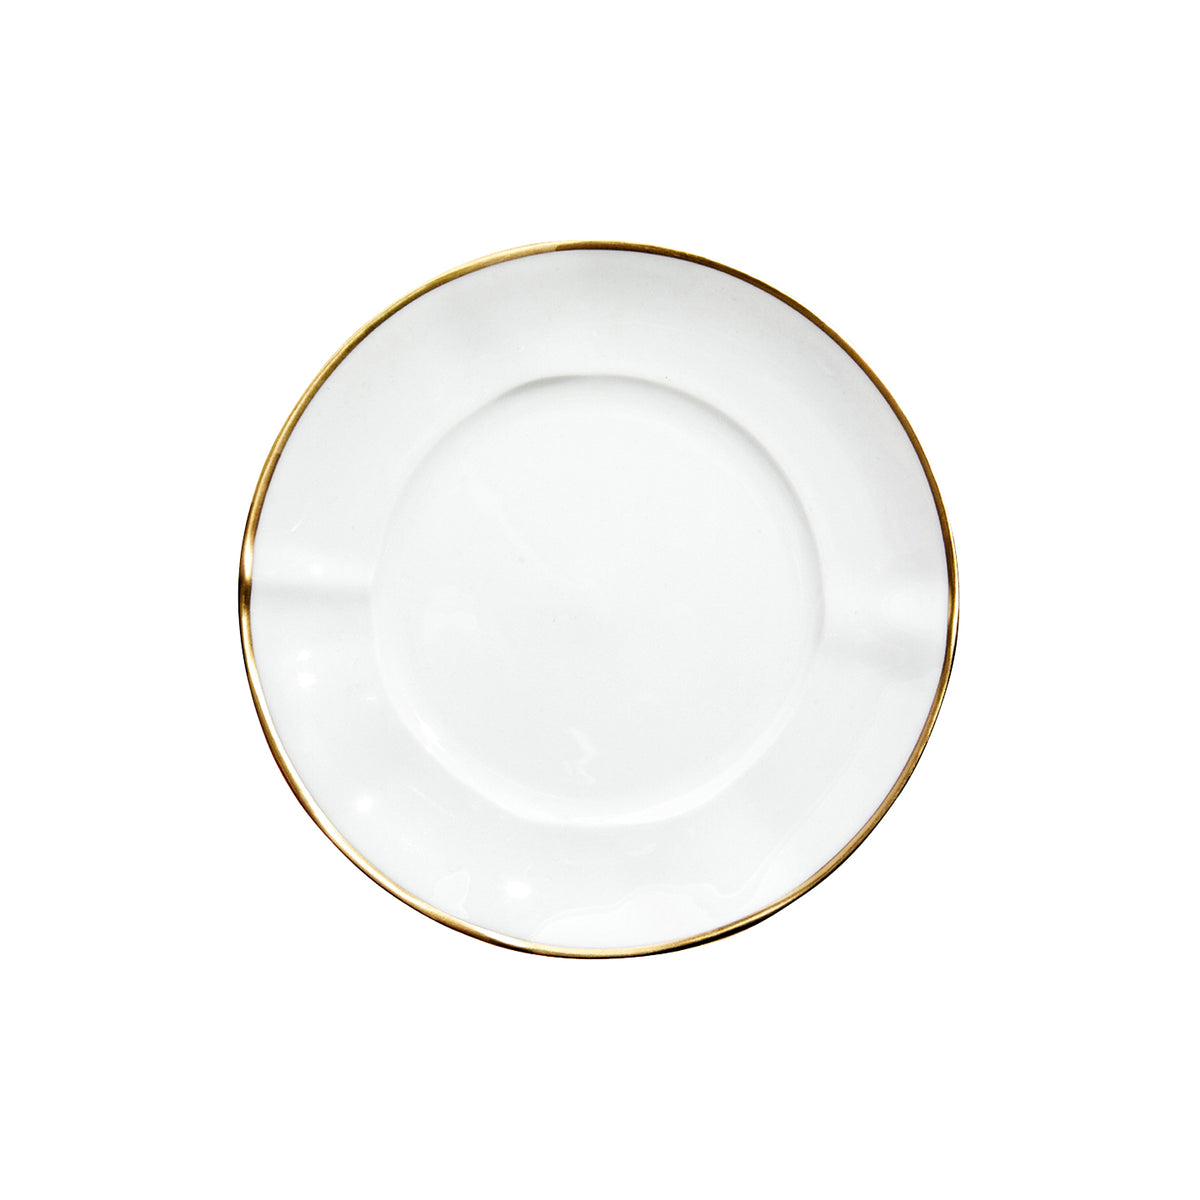 Simply Elegant Gold Dessert Plate